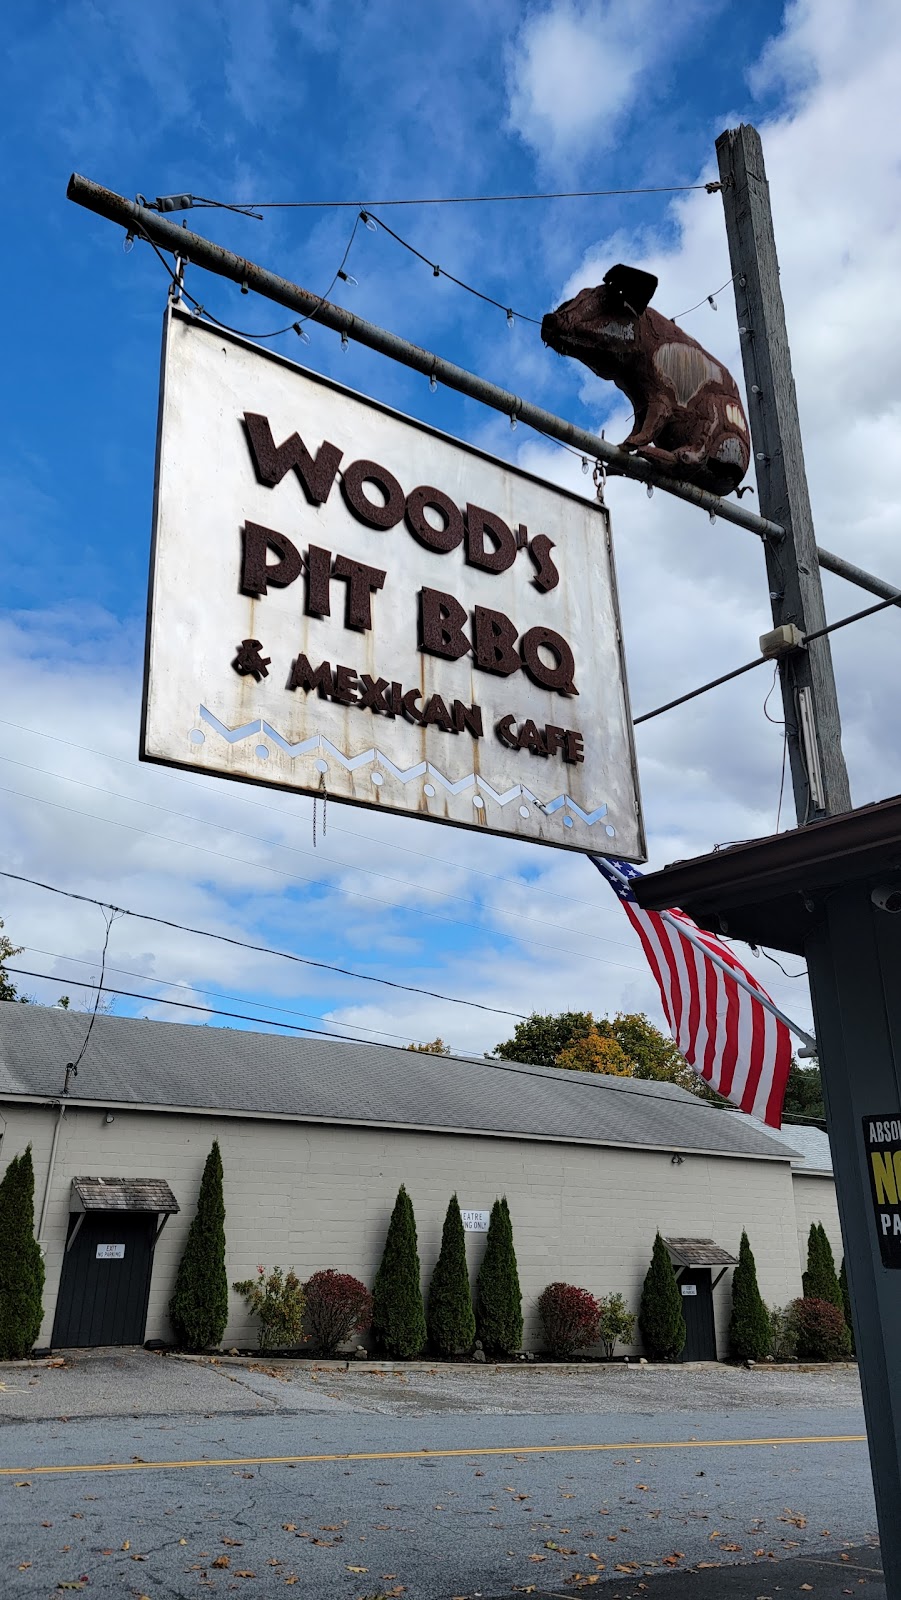 Woods Pit BBQ & Mexican Cafe | 123 Bantam Lake Rd, Bantam, CT 06750 | Phone: (860) 567-9869